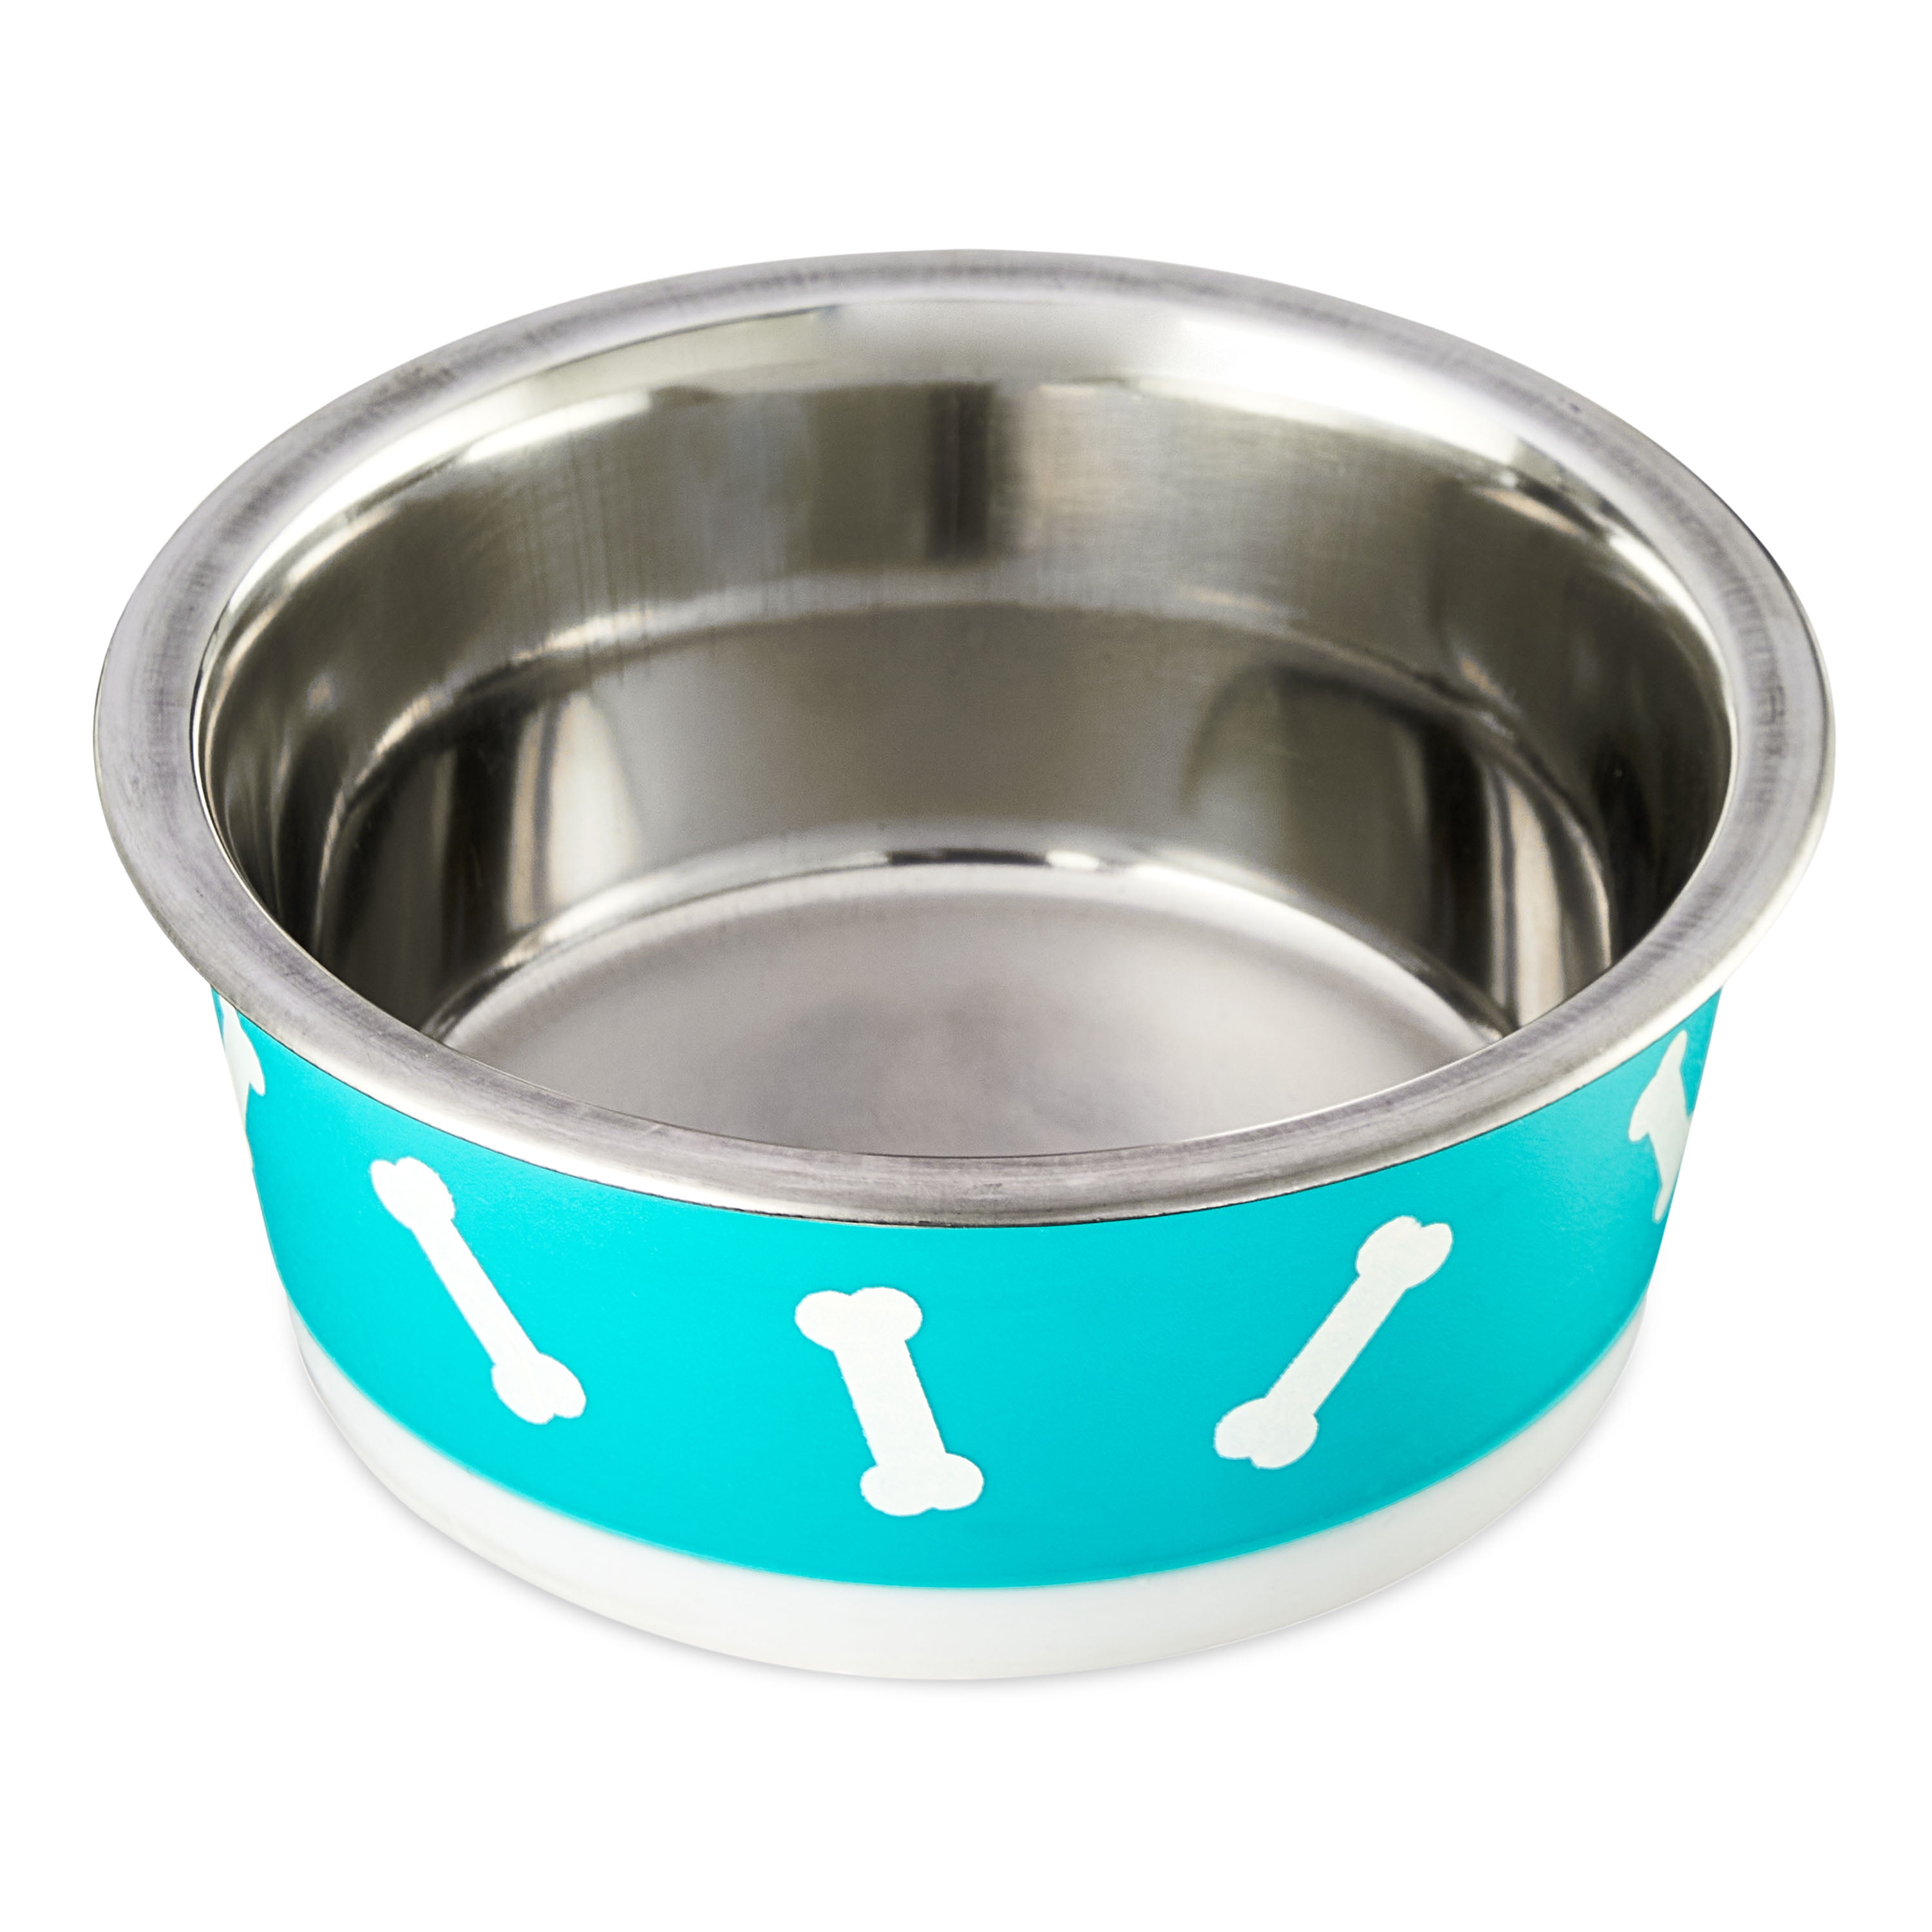 Vibrant Life Small Stainless Steel Dog Bowl, Teal, 12 Fluid Ounce Capacity